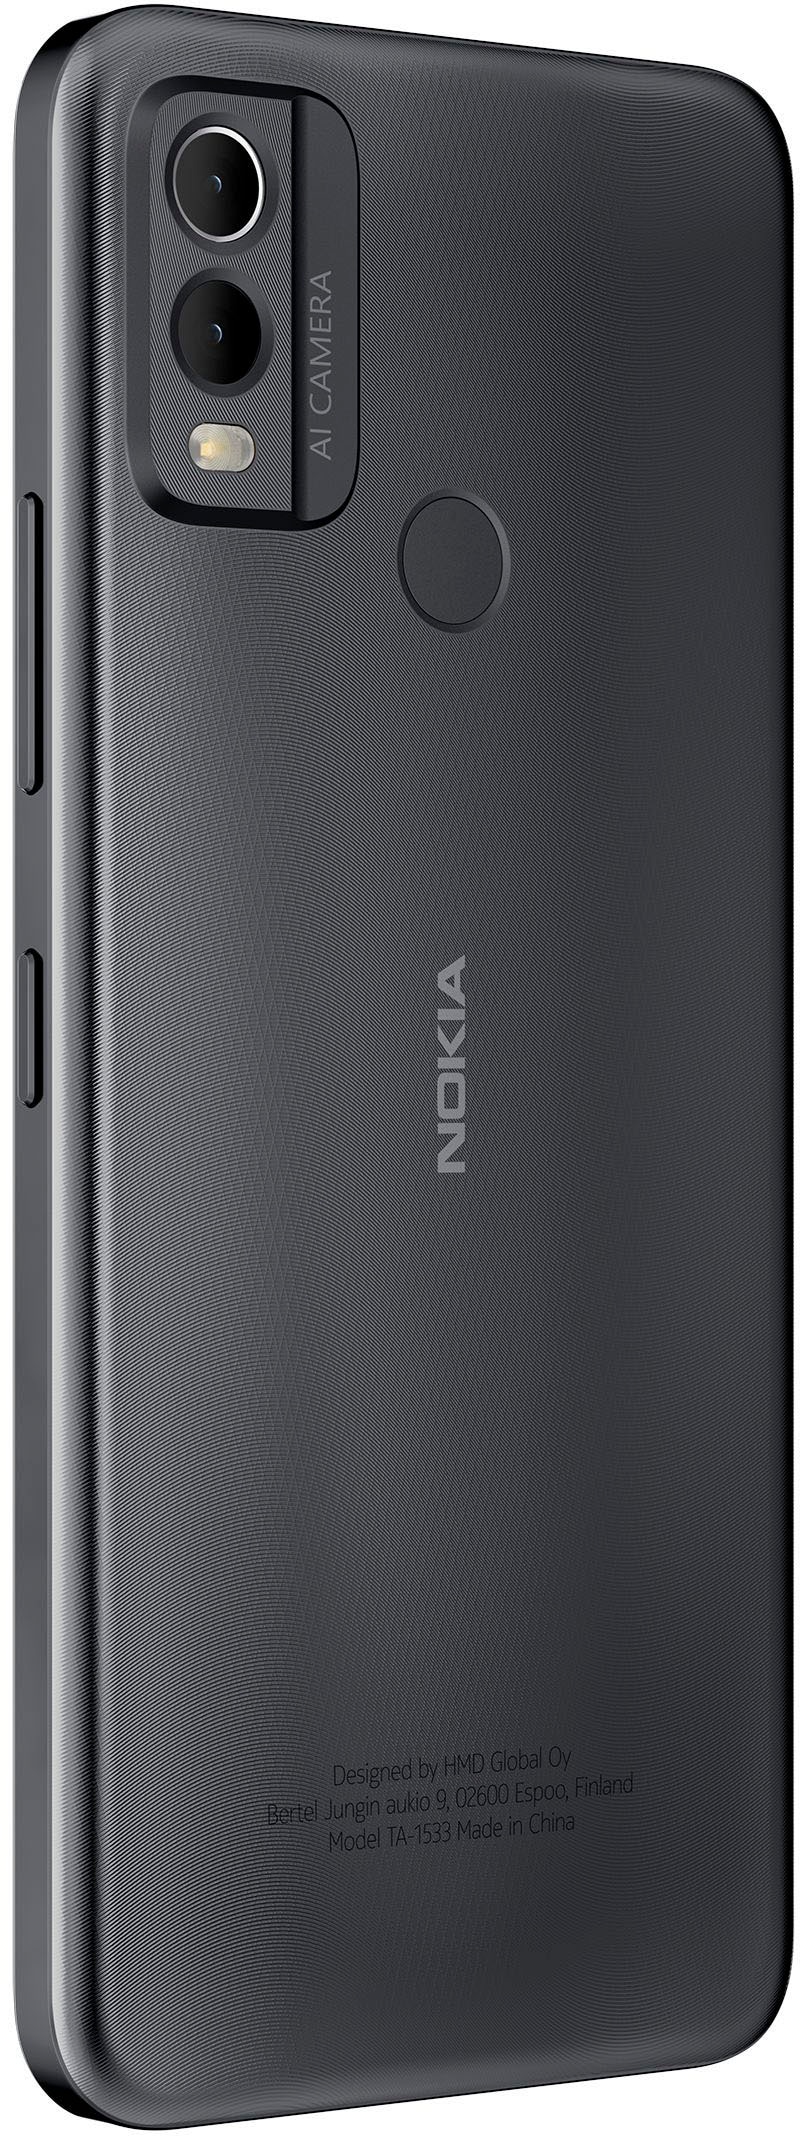 Nokia Smartphone »C22, 2+64GB«, Midnight Black, 16,56 cm/6,52 Zoll, 64 GB Speicherplatz, 13 MP Kamera